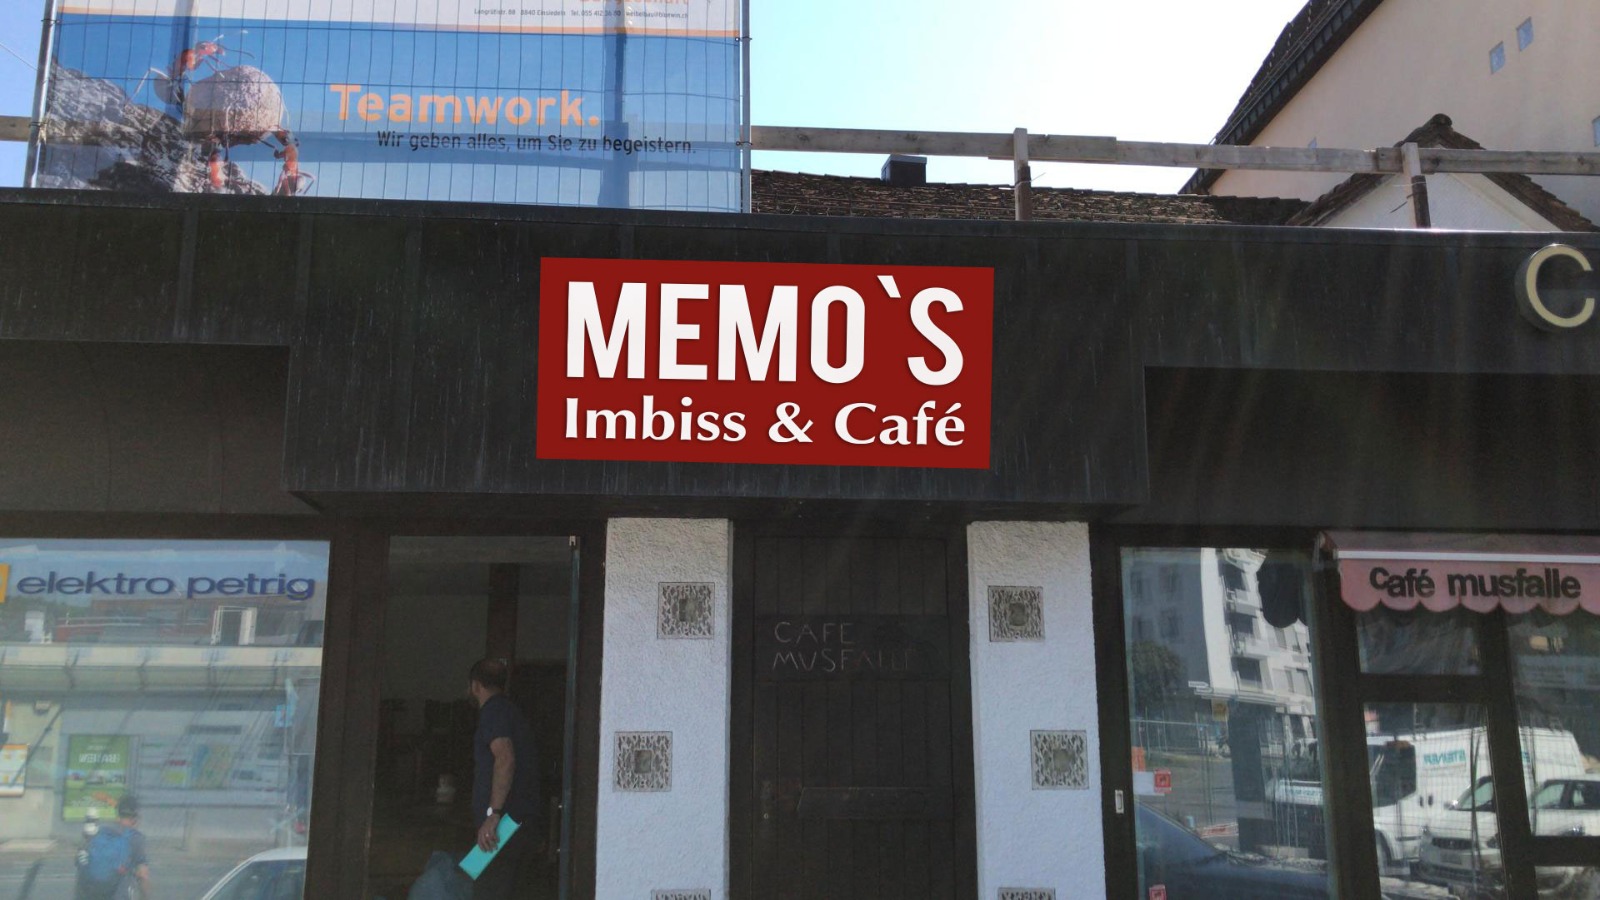 Memo's Imbiss & Café